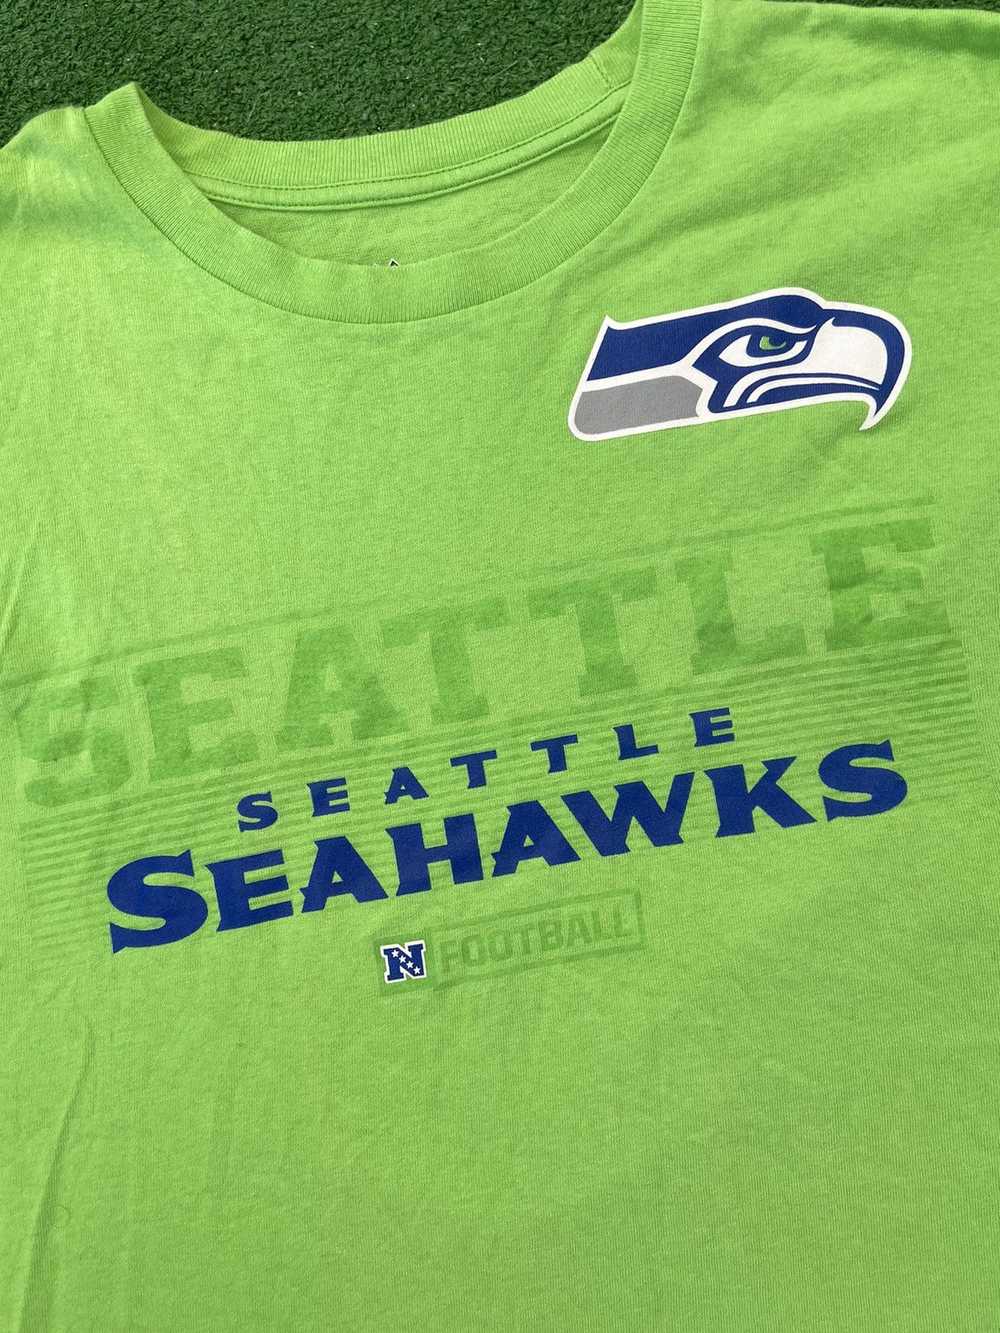 NFL Seattle seahawks tshirt Jersey nfl - image 2